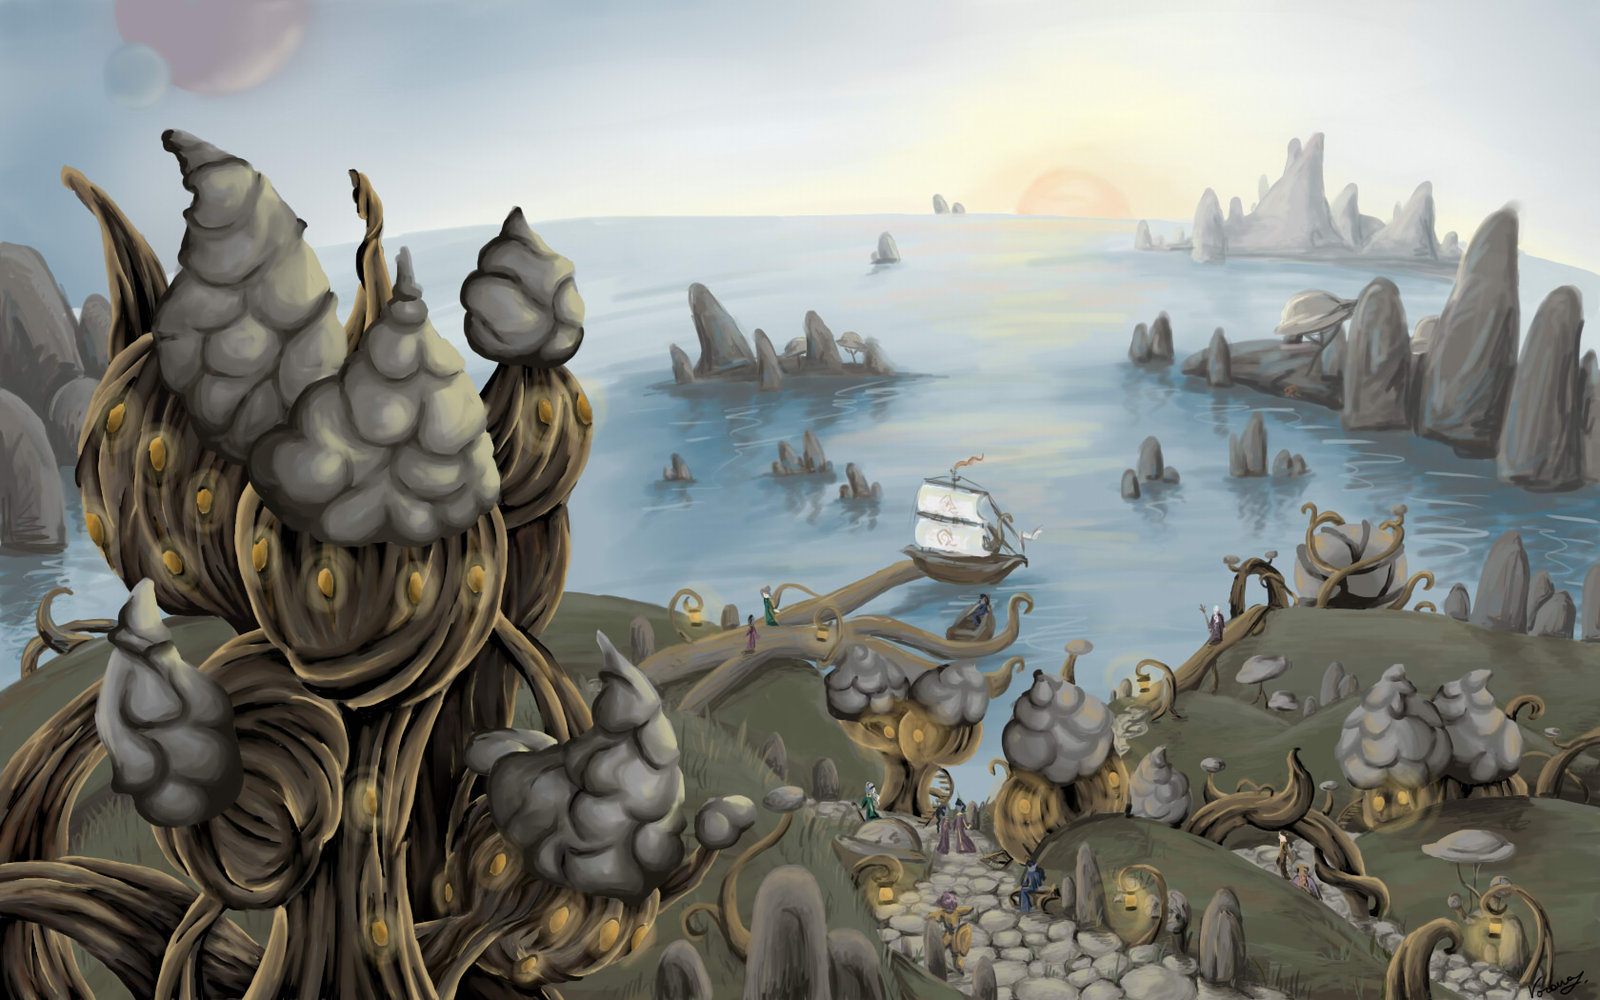 PCデスクトップにエルダースクロール, テレビゲーム, The Elder Scrolls Iii: Morrowind (モロウウィンド)画像を無料でダウンロード